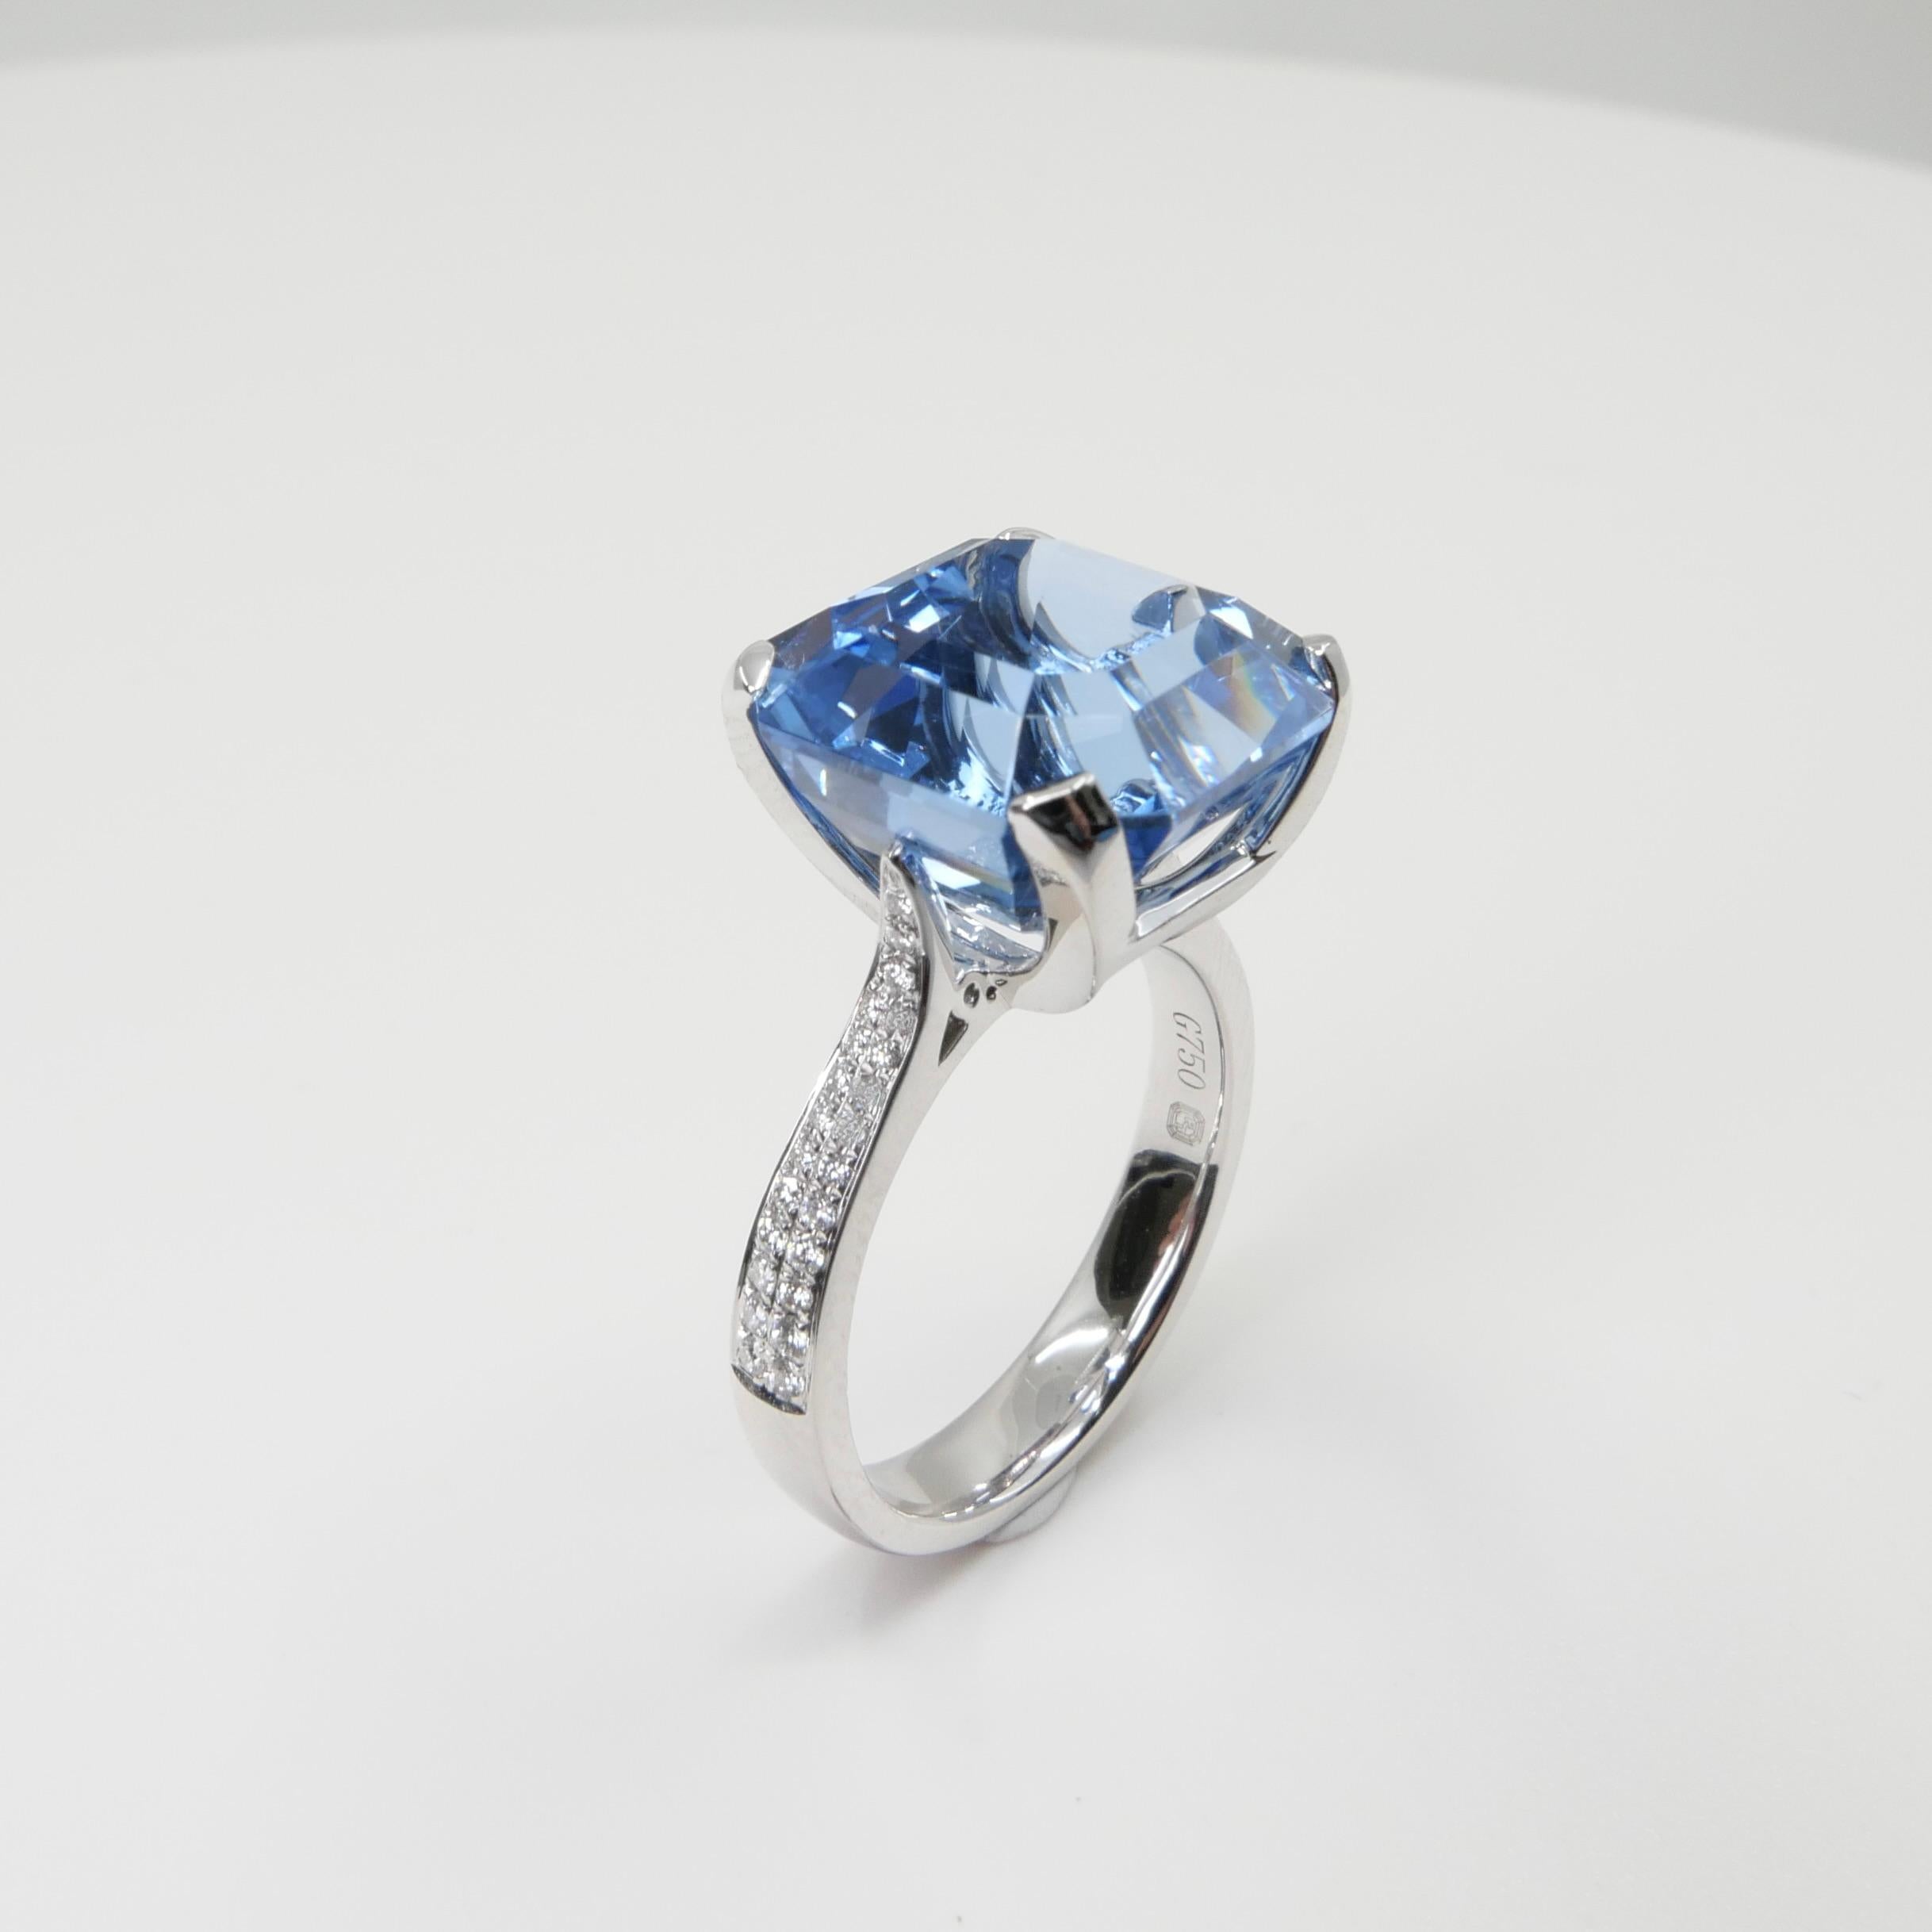 Certified 11.23 Cts Asscher Cut Aquamarine Diamond Ring, True Santa Maria Color 2